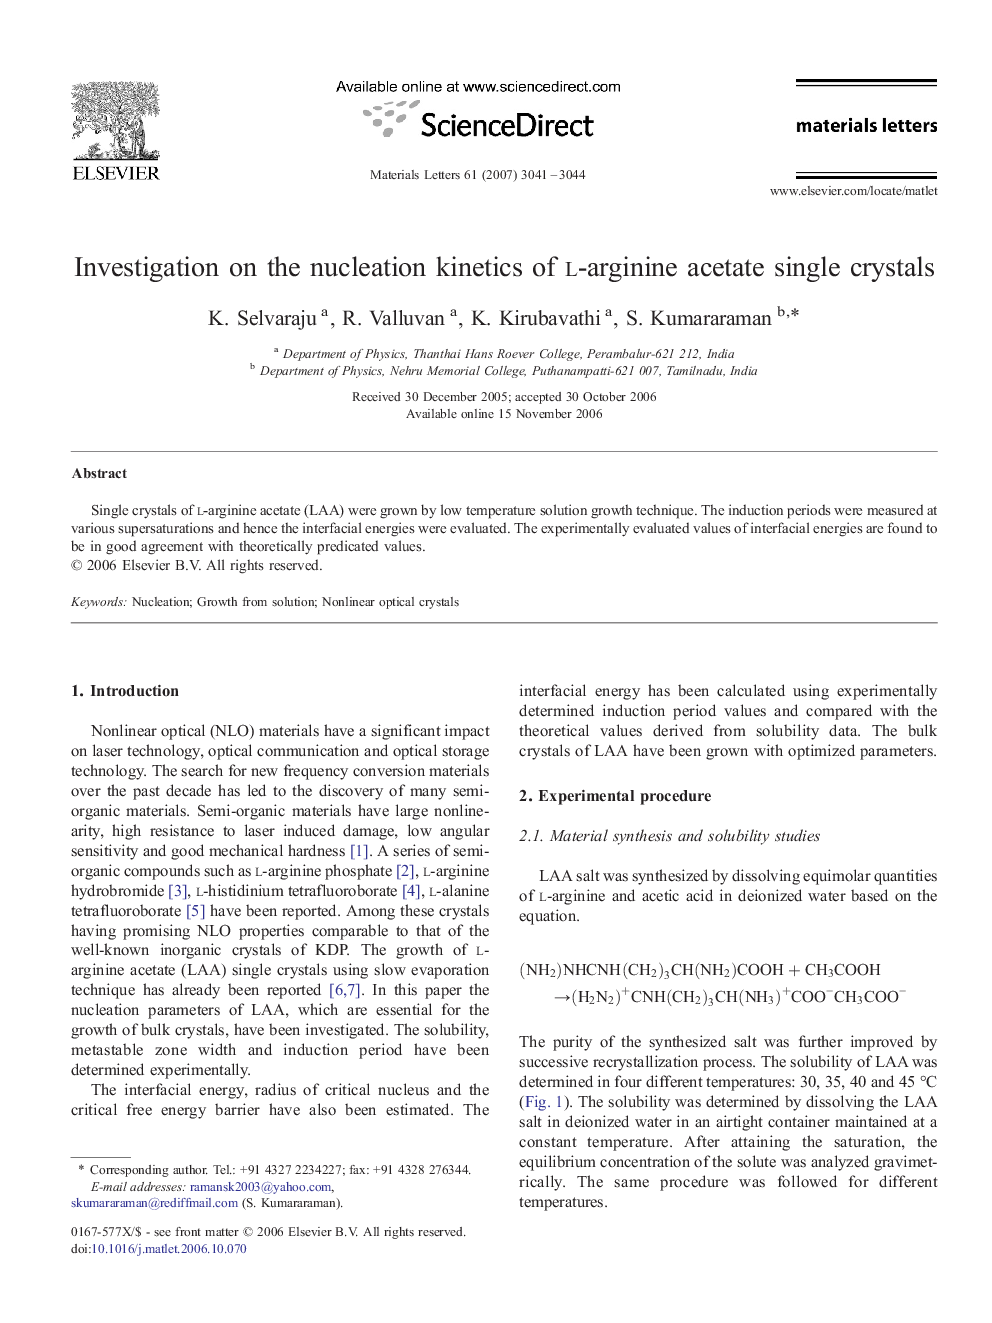 Investigation on the nucleation kinetics of l-arginine acetate single crystals